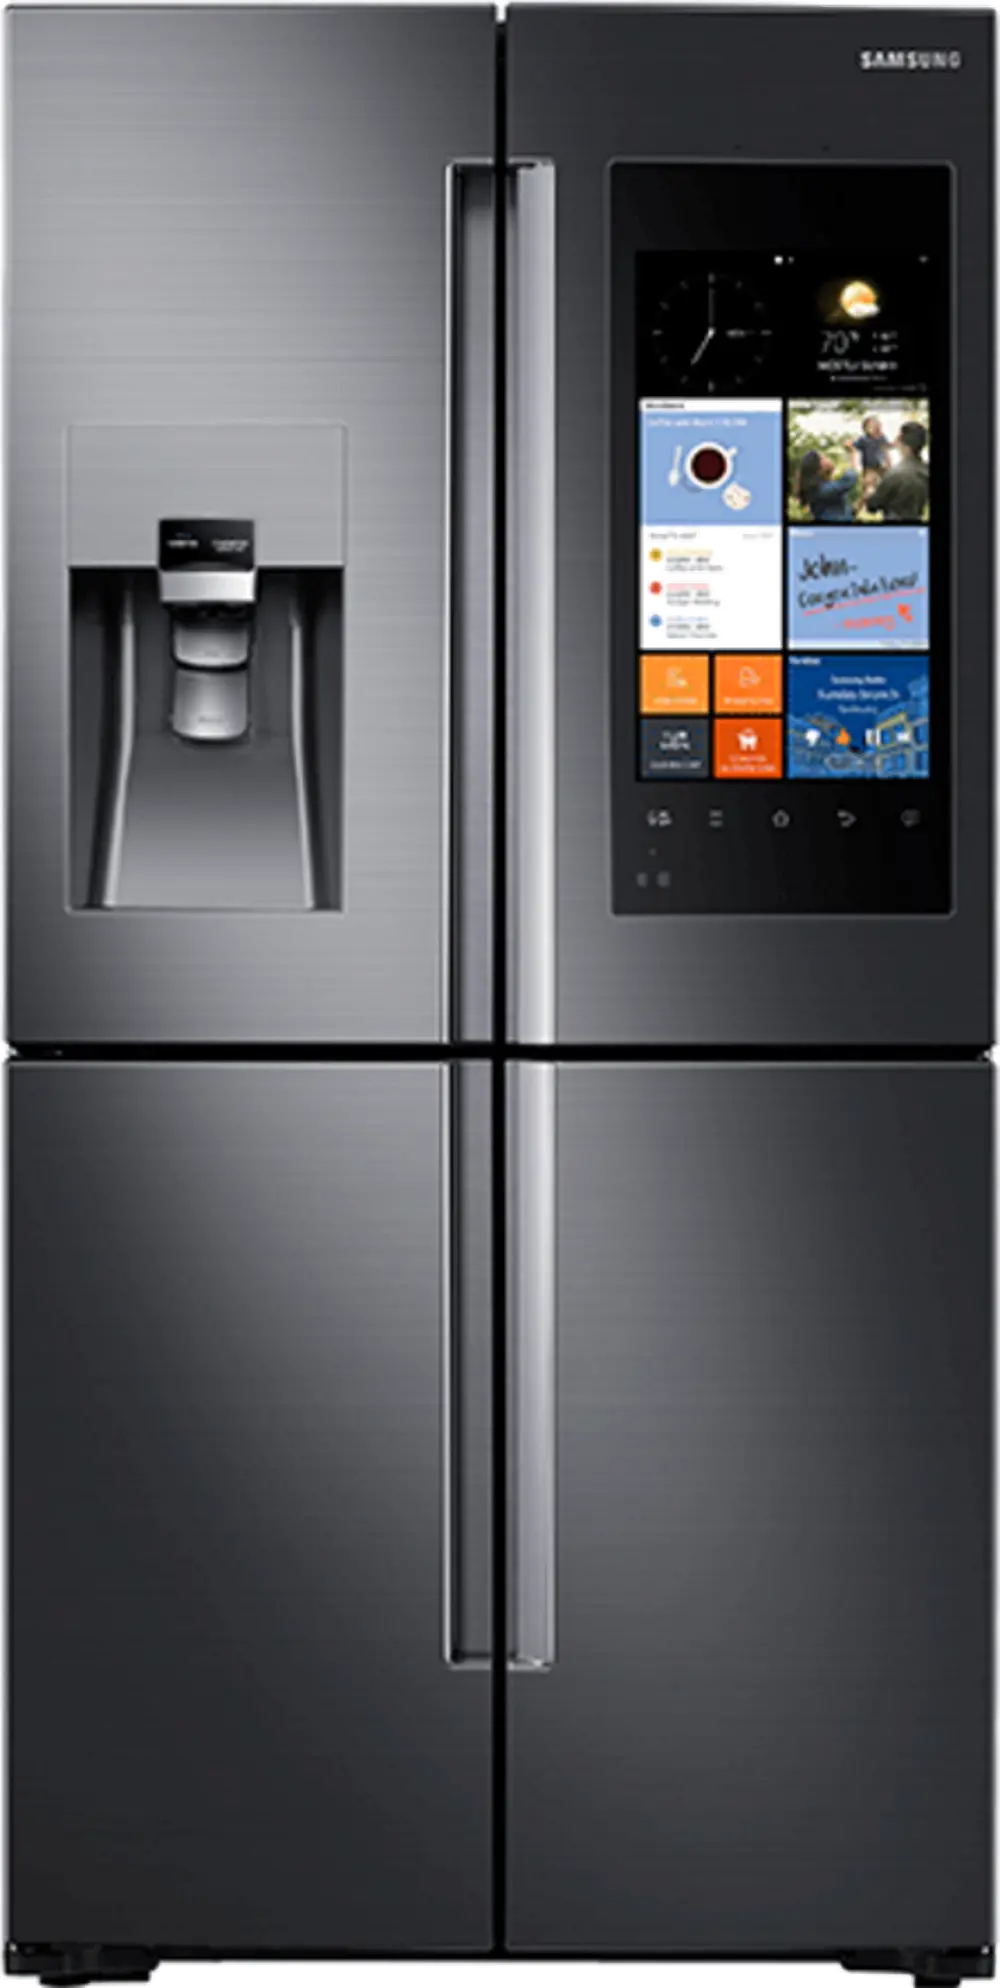 RF28K9580SG Samsung French Door Refrigerator Refrigerator - 36 Inch Black Stainless Steel-1